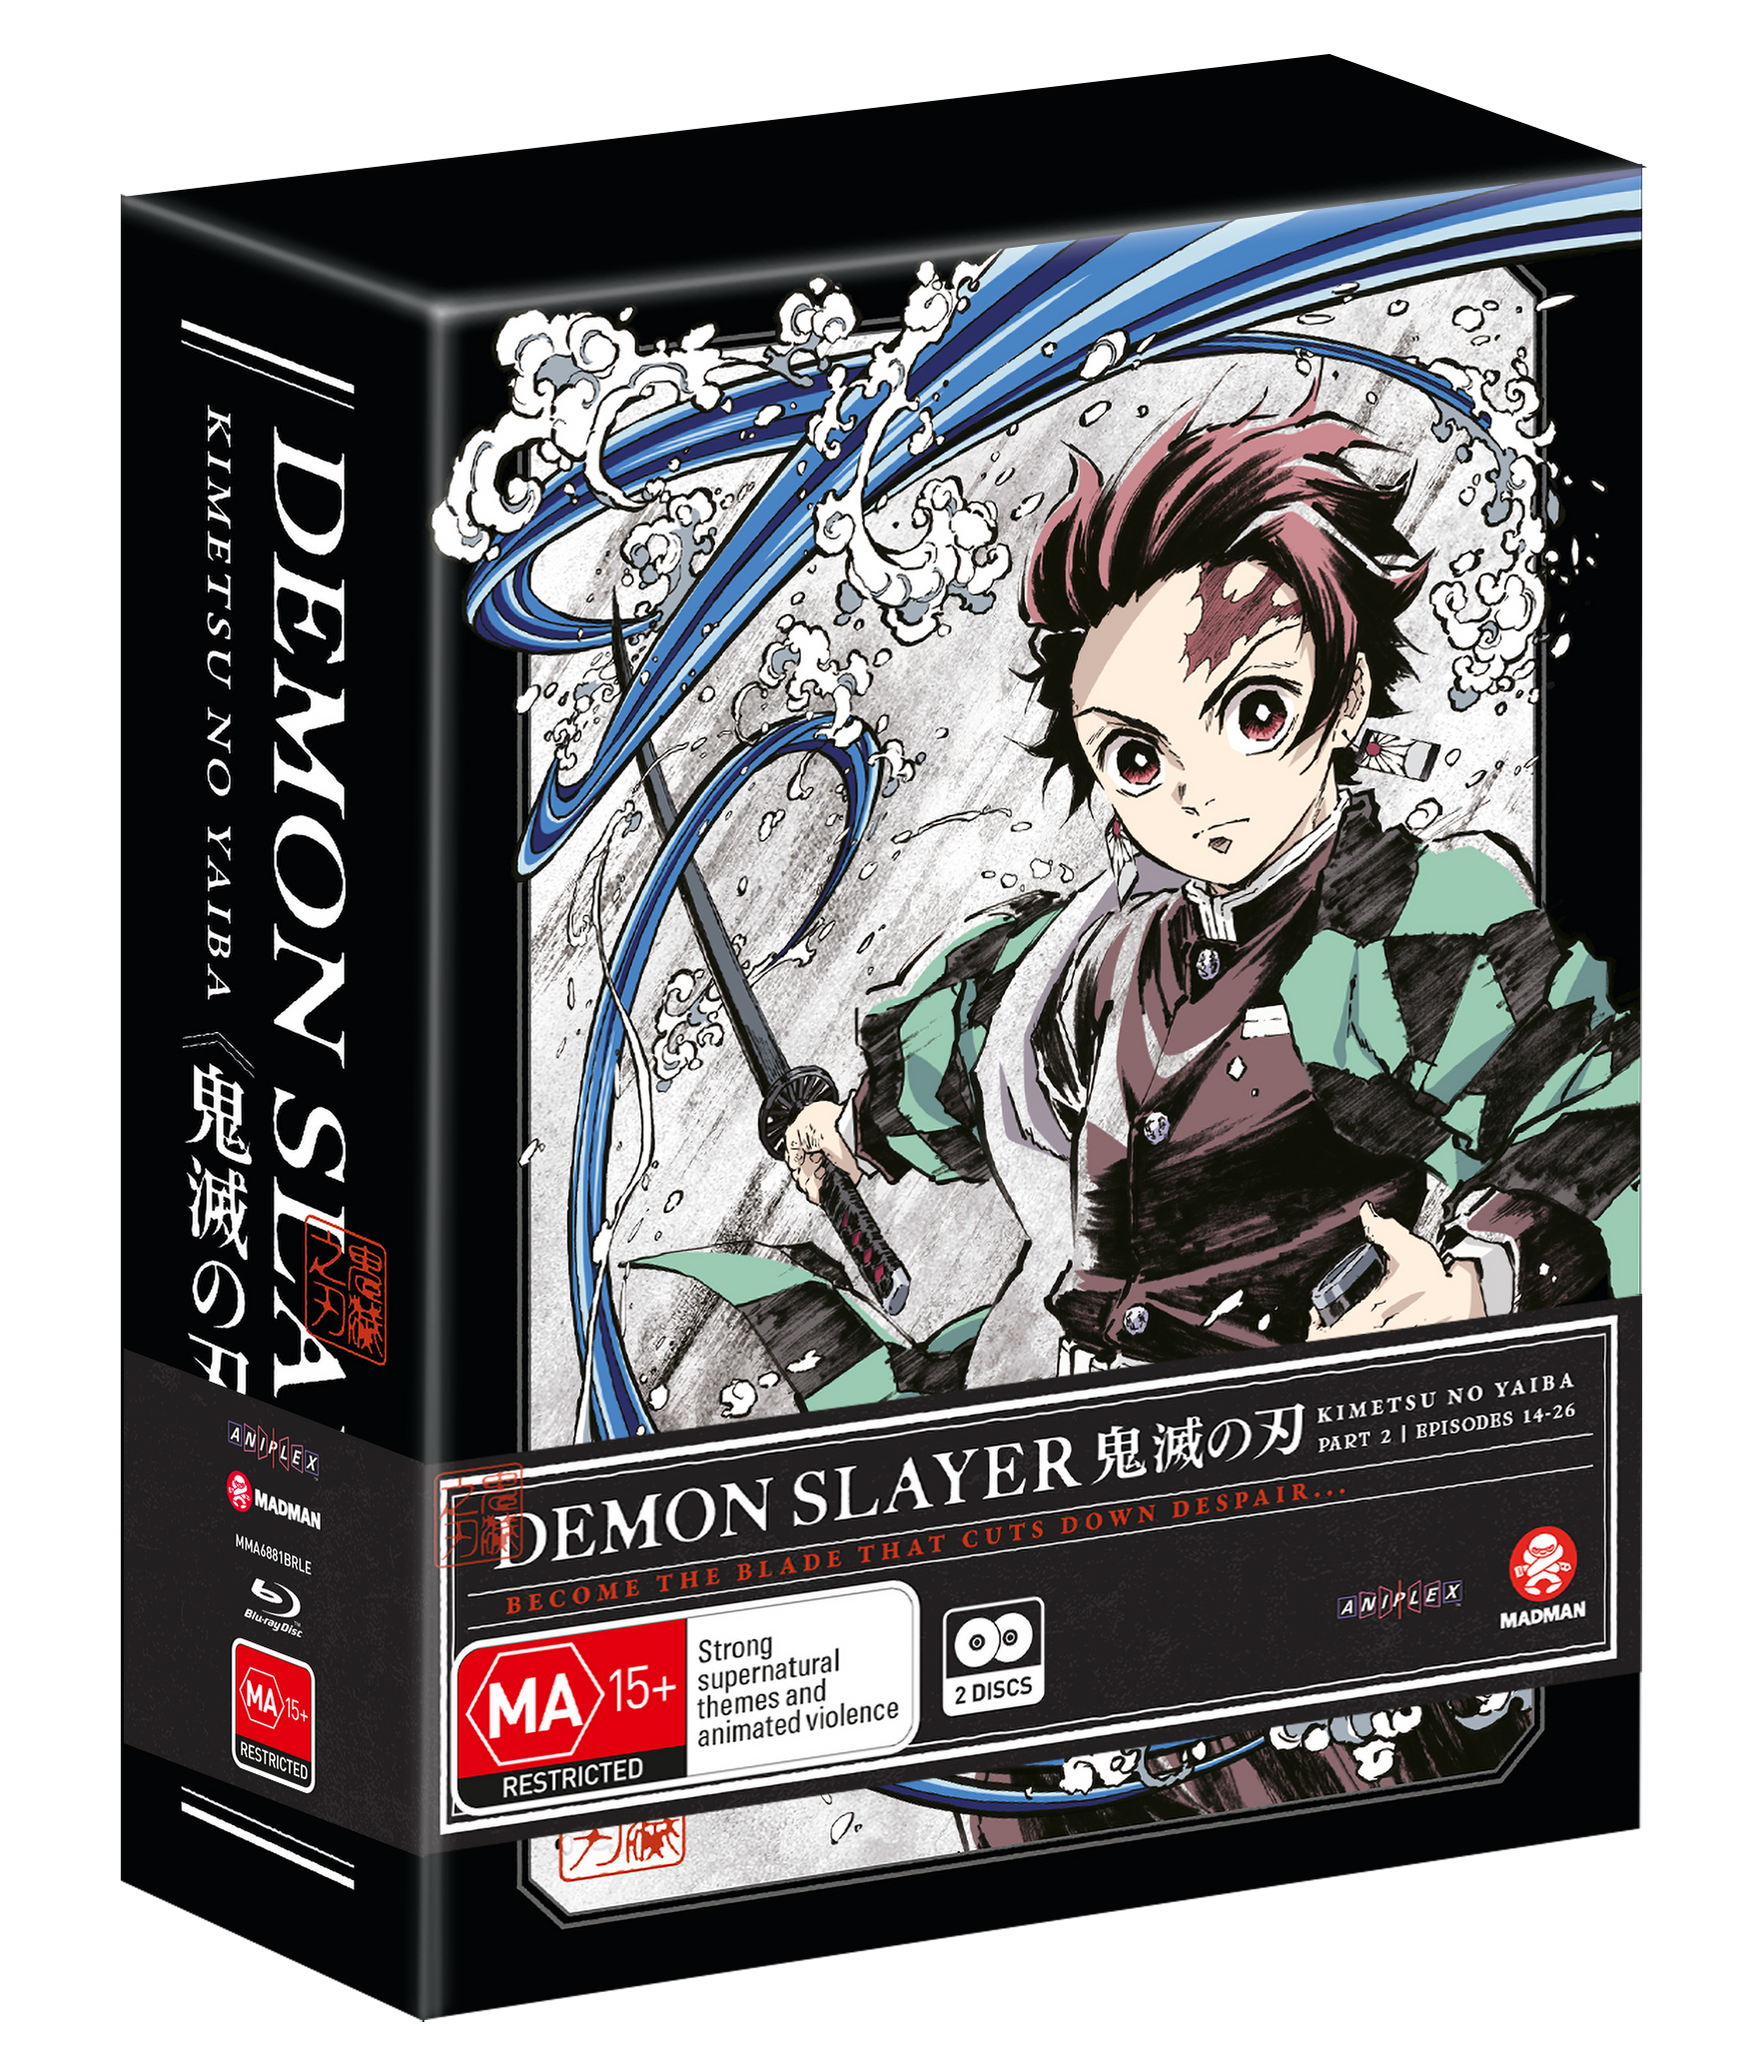 Demon Slayer Kimetsu No Yaiba Part 2 Eps 14 26 Blu Ray Limited E Mjl Anime